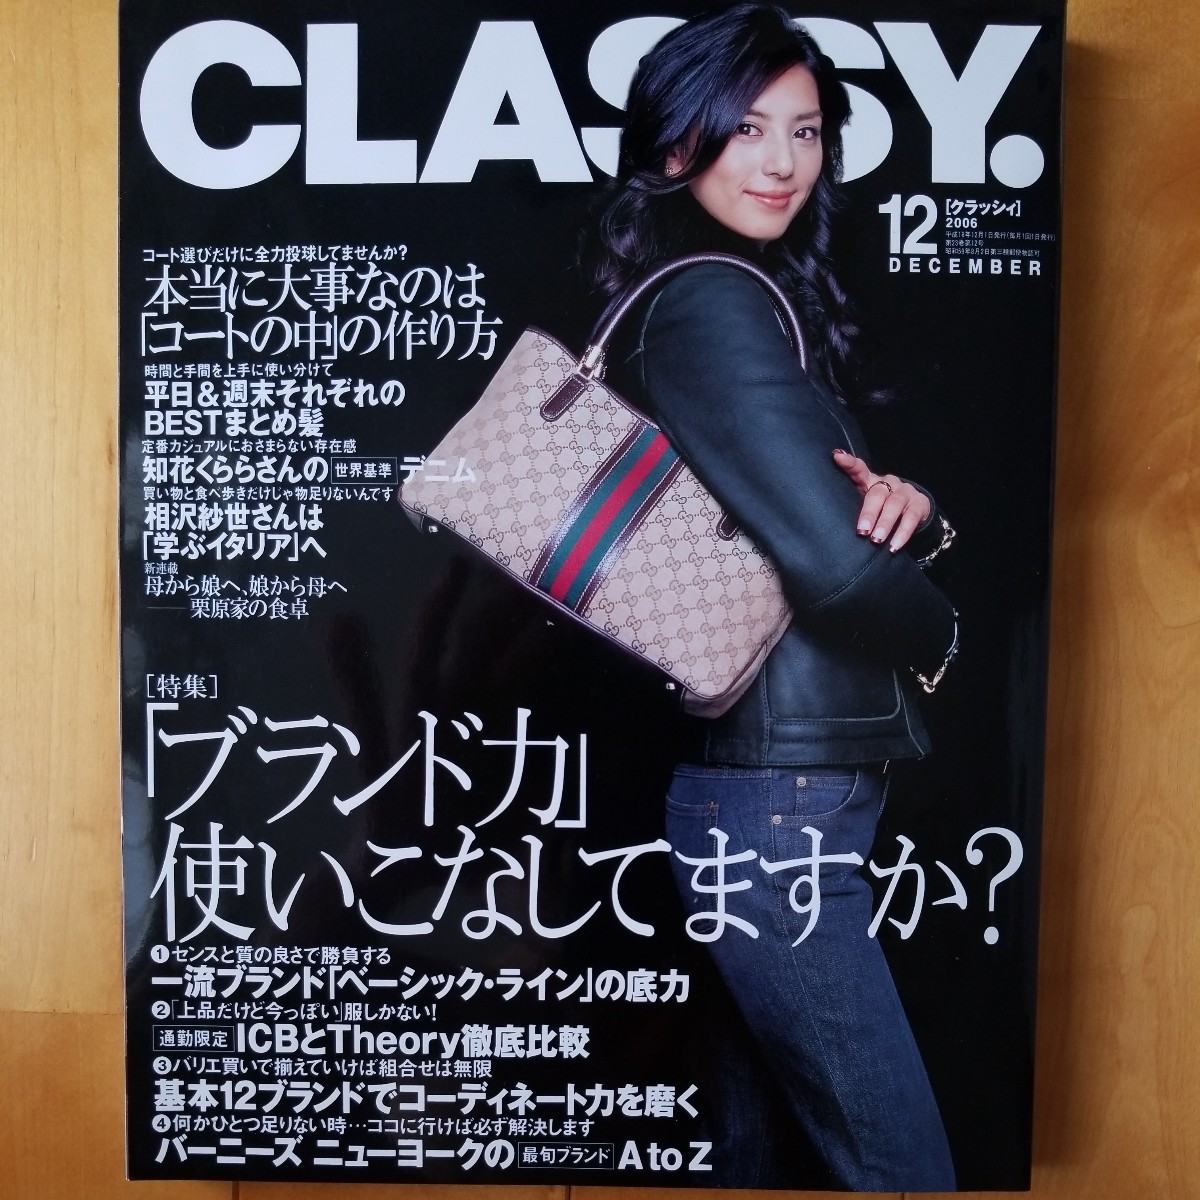 Fashion CLASSY Yahoo Japan Auction. Auction agent, Shopping